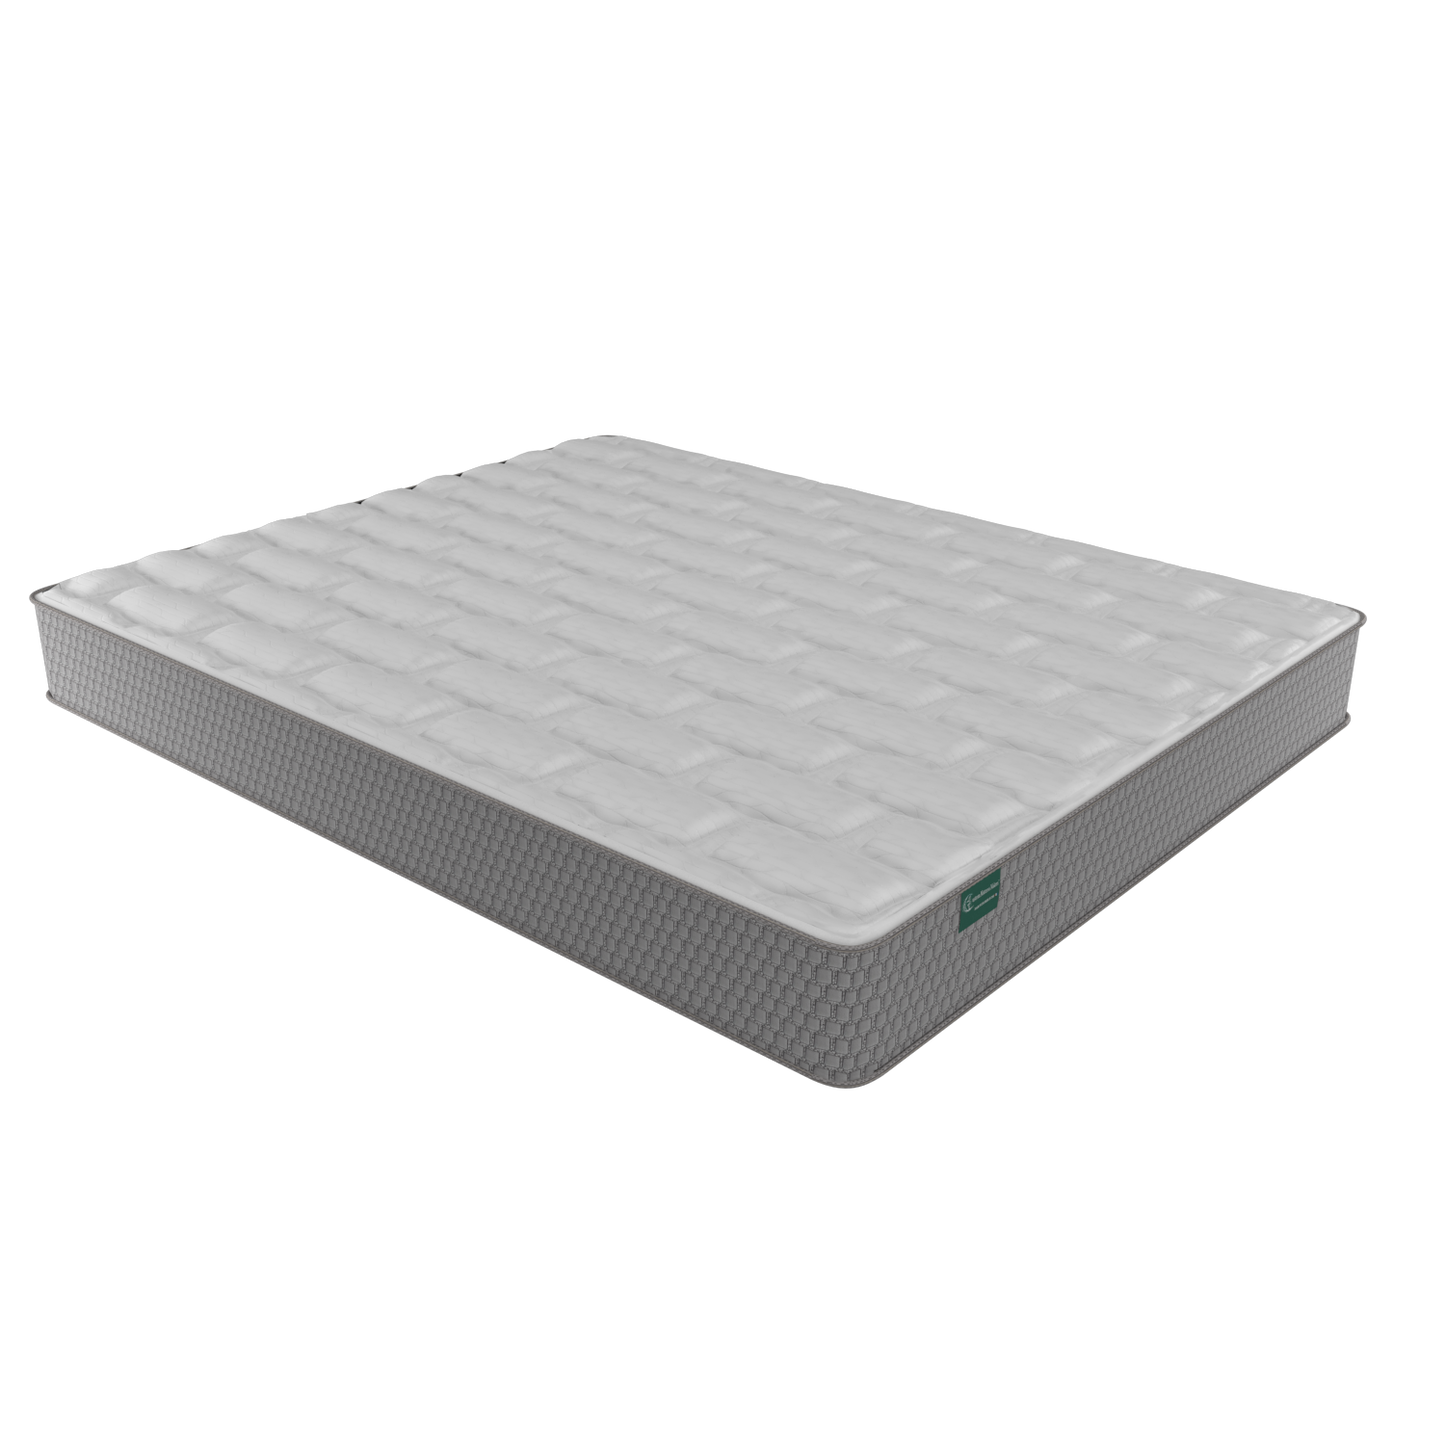 Clearwater, 52" x 71" mattress